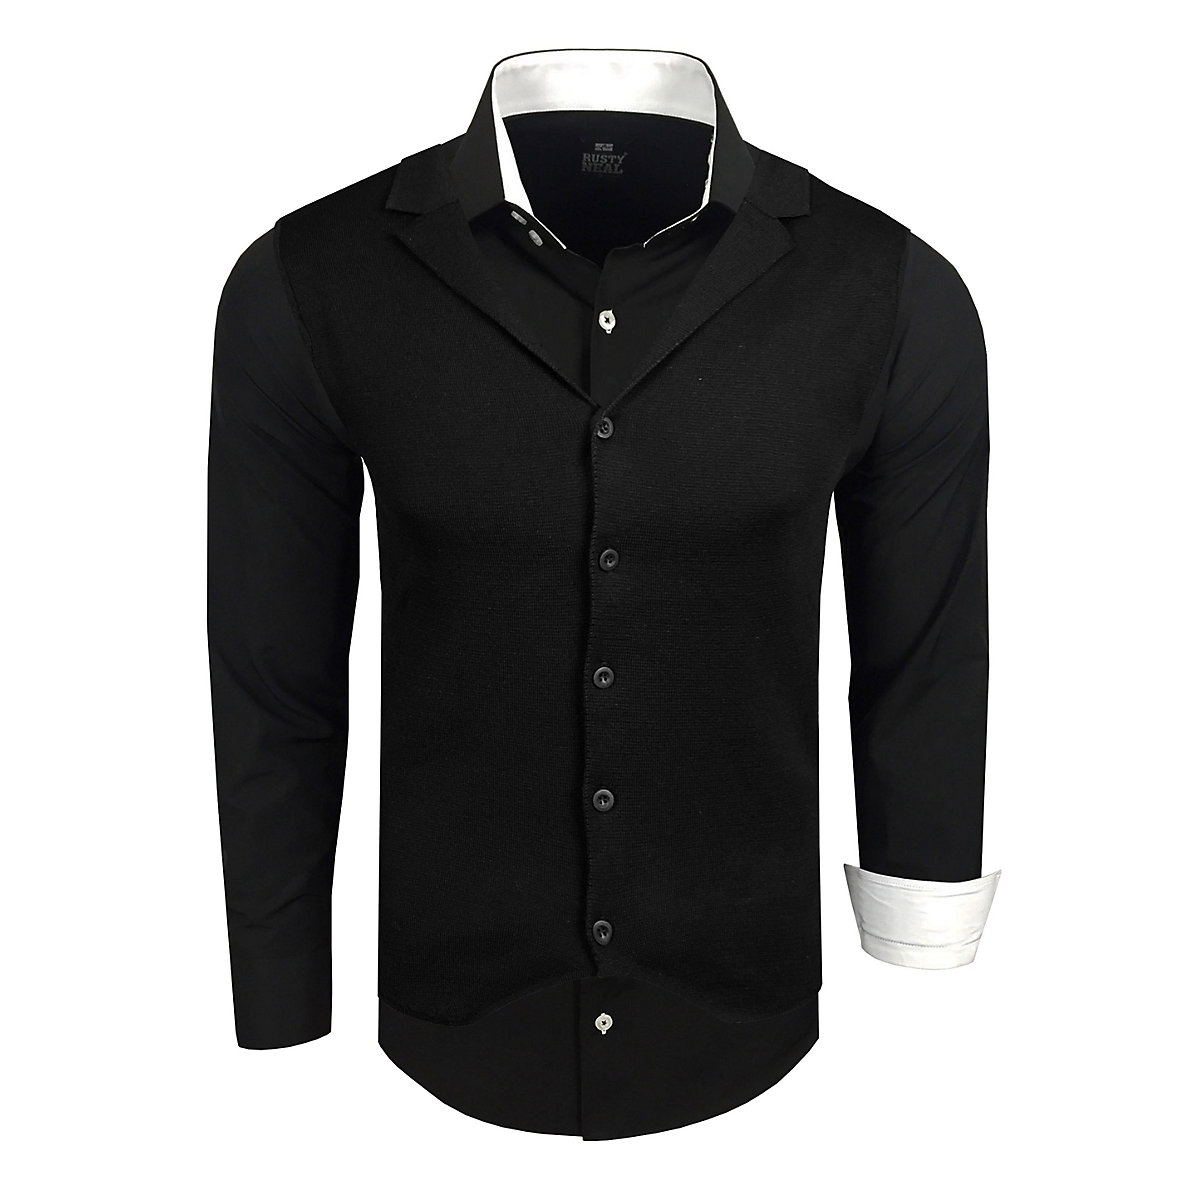 RUSTY NEAL Hemden-Set schwarz/weiß